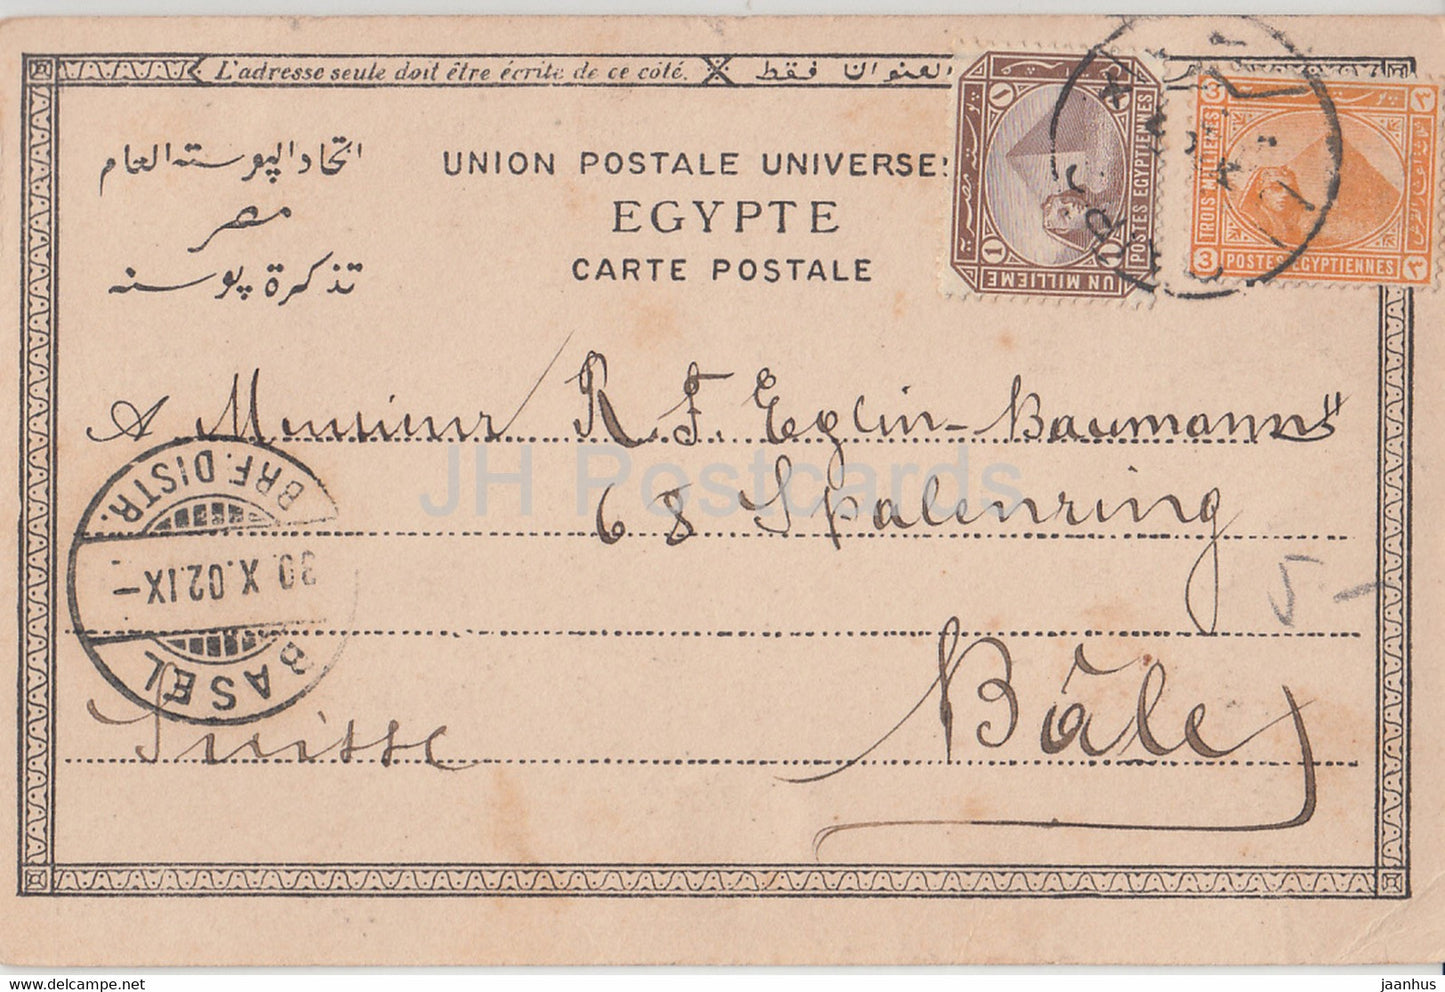 Prize d'un crocodile - Tiere - 335 - alte Postkarte - 1902 - Ägypten - gebraucht